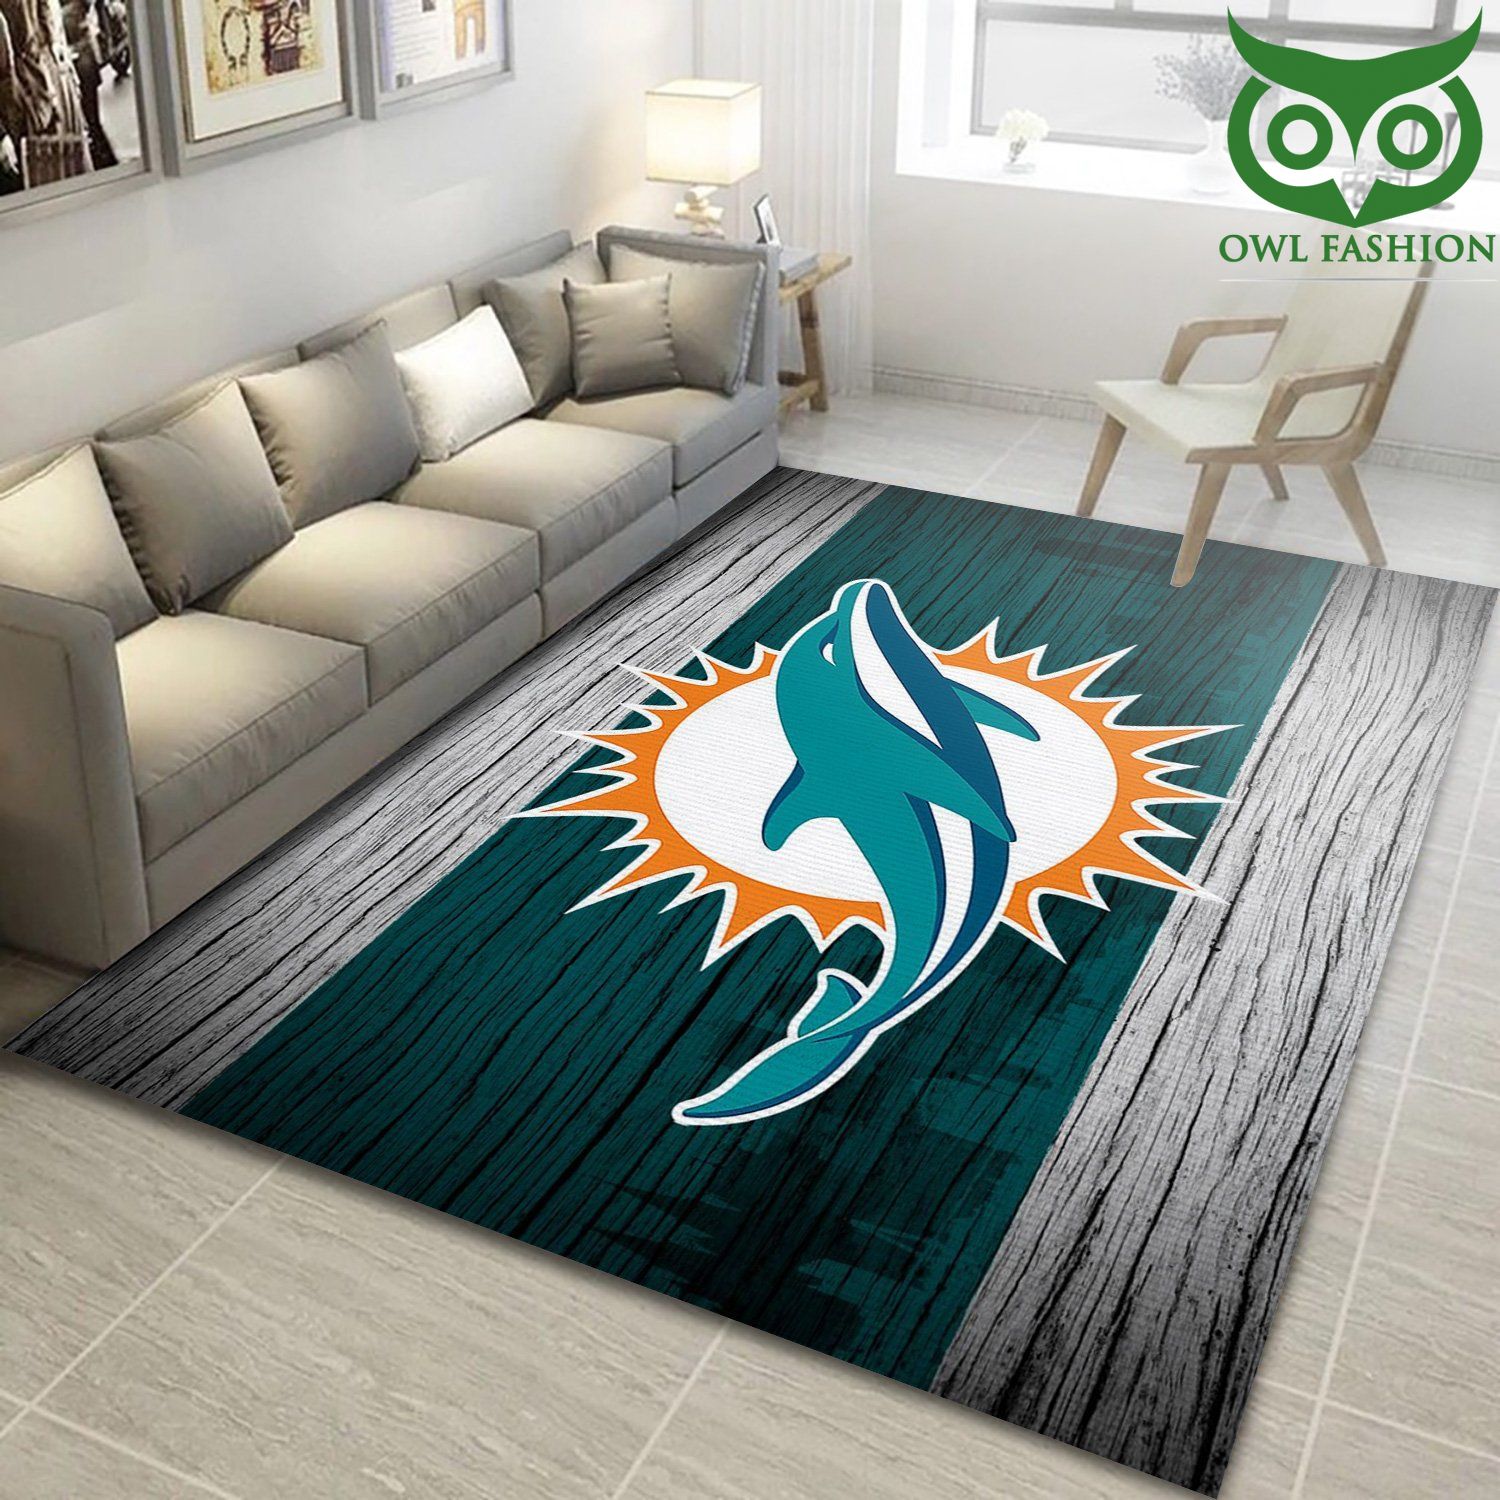 Miami Dolphins Nfl carpet rug house decoration